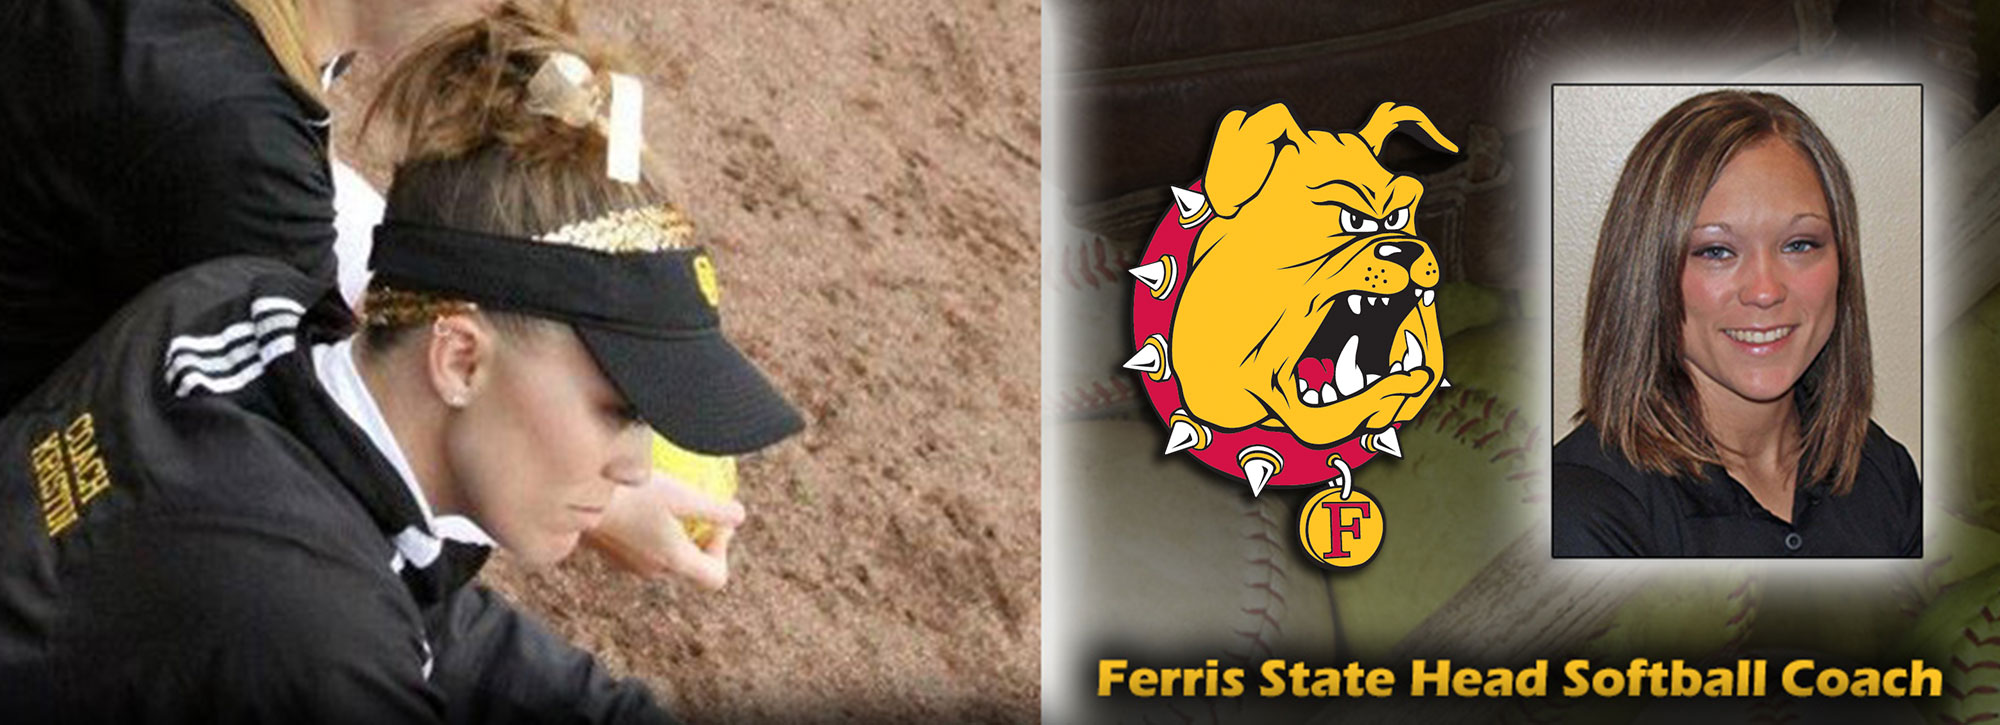 Former GLIAC Student-Athlete Kristin Janes Chosen As Ferris State's Head Softball Coach